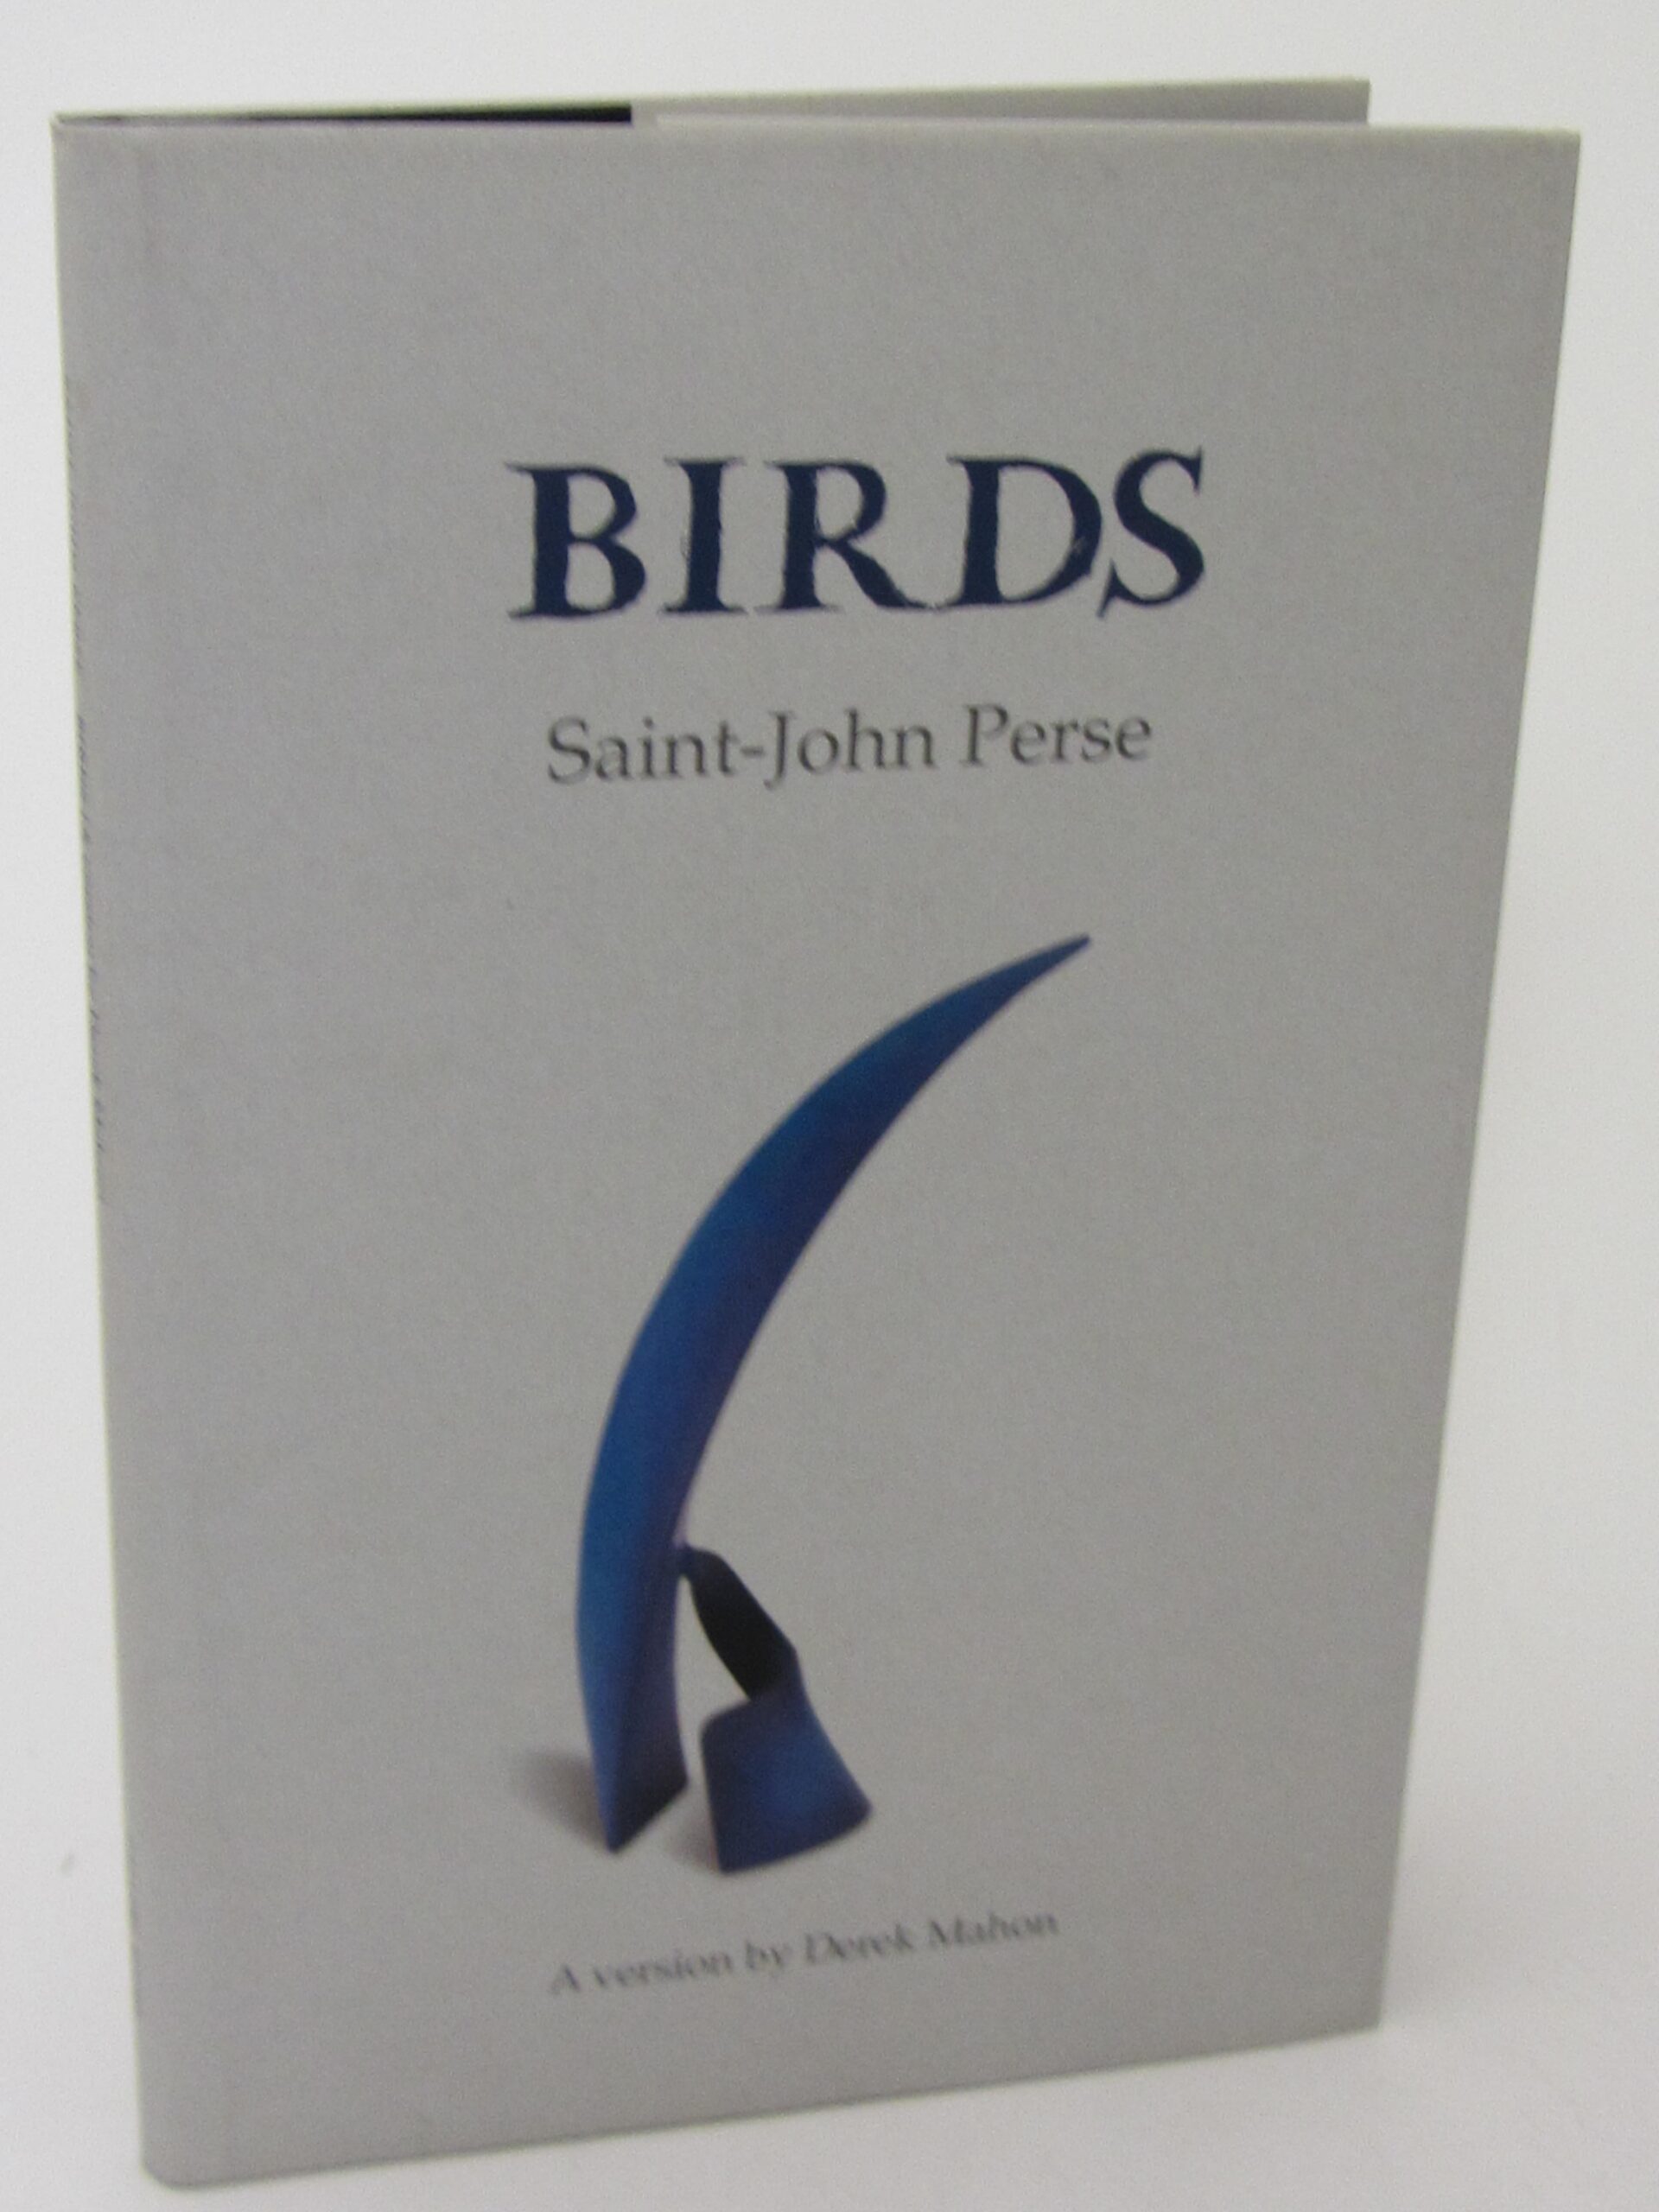 Birds. Saint-John Perse. A Version (2002) by Derek Mahon